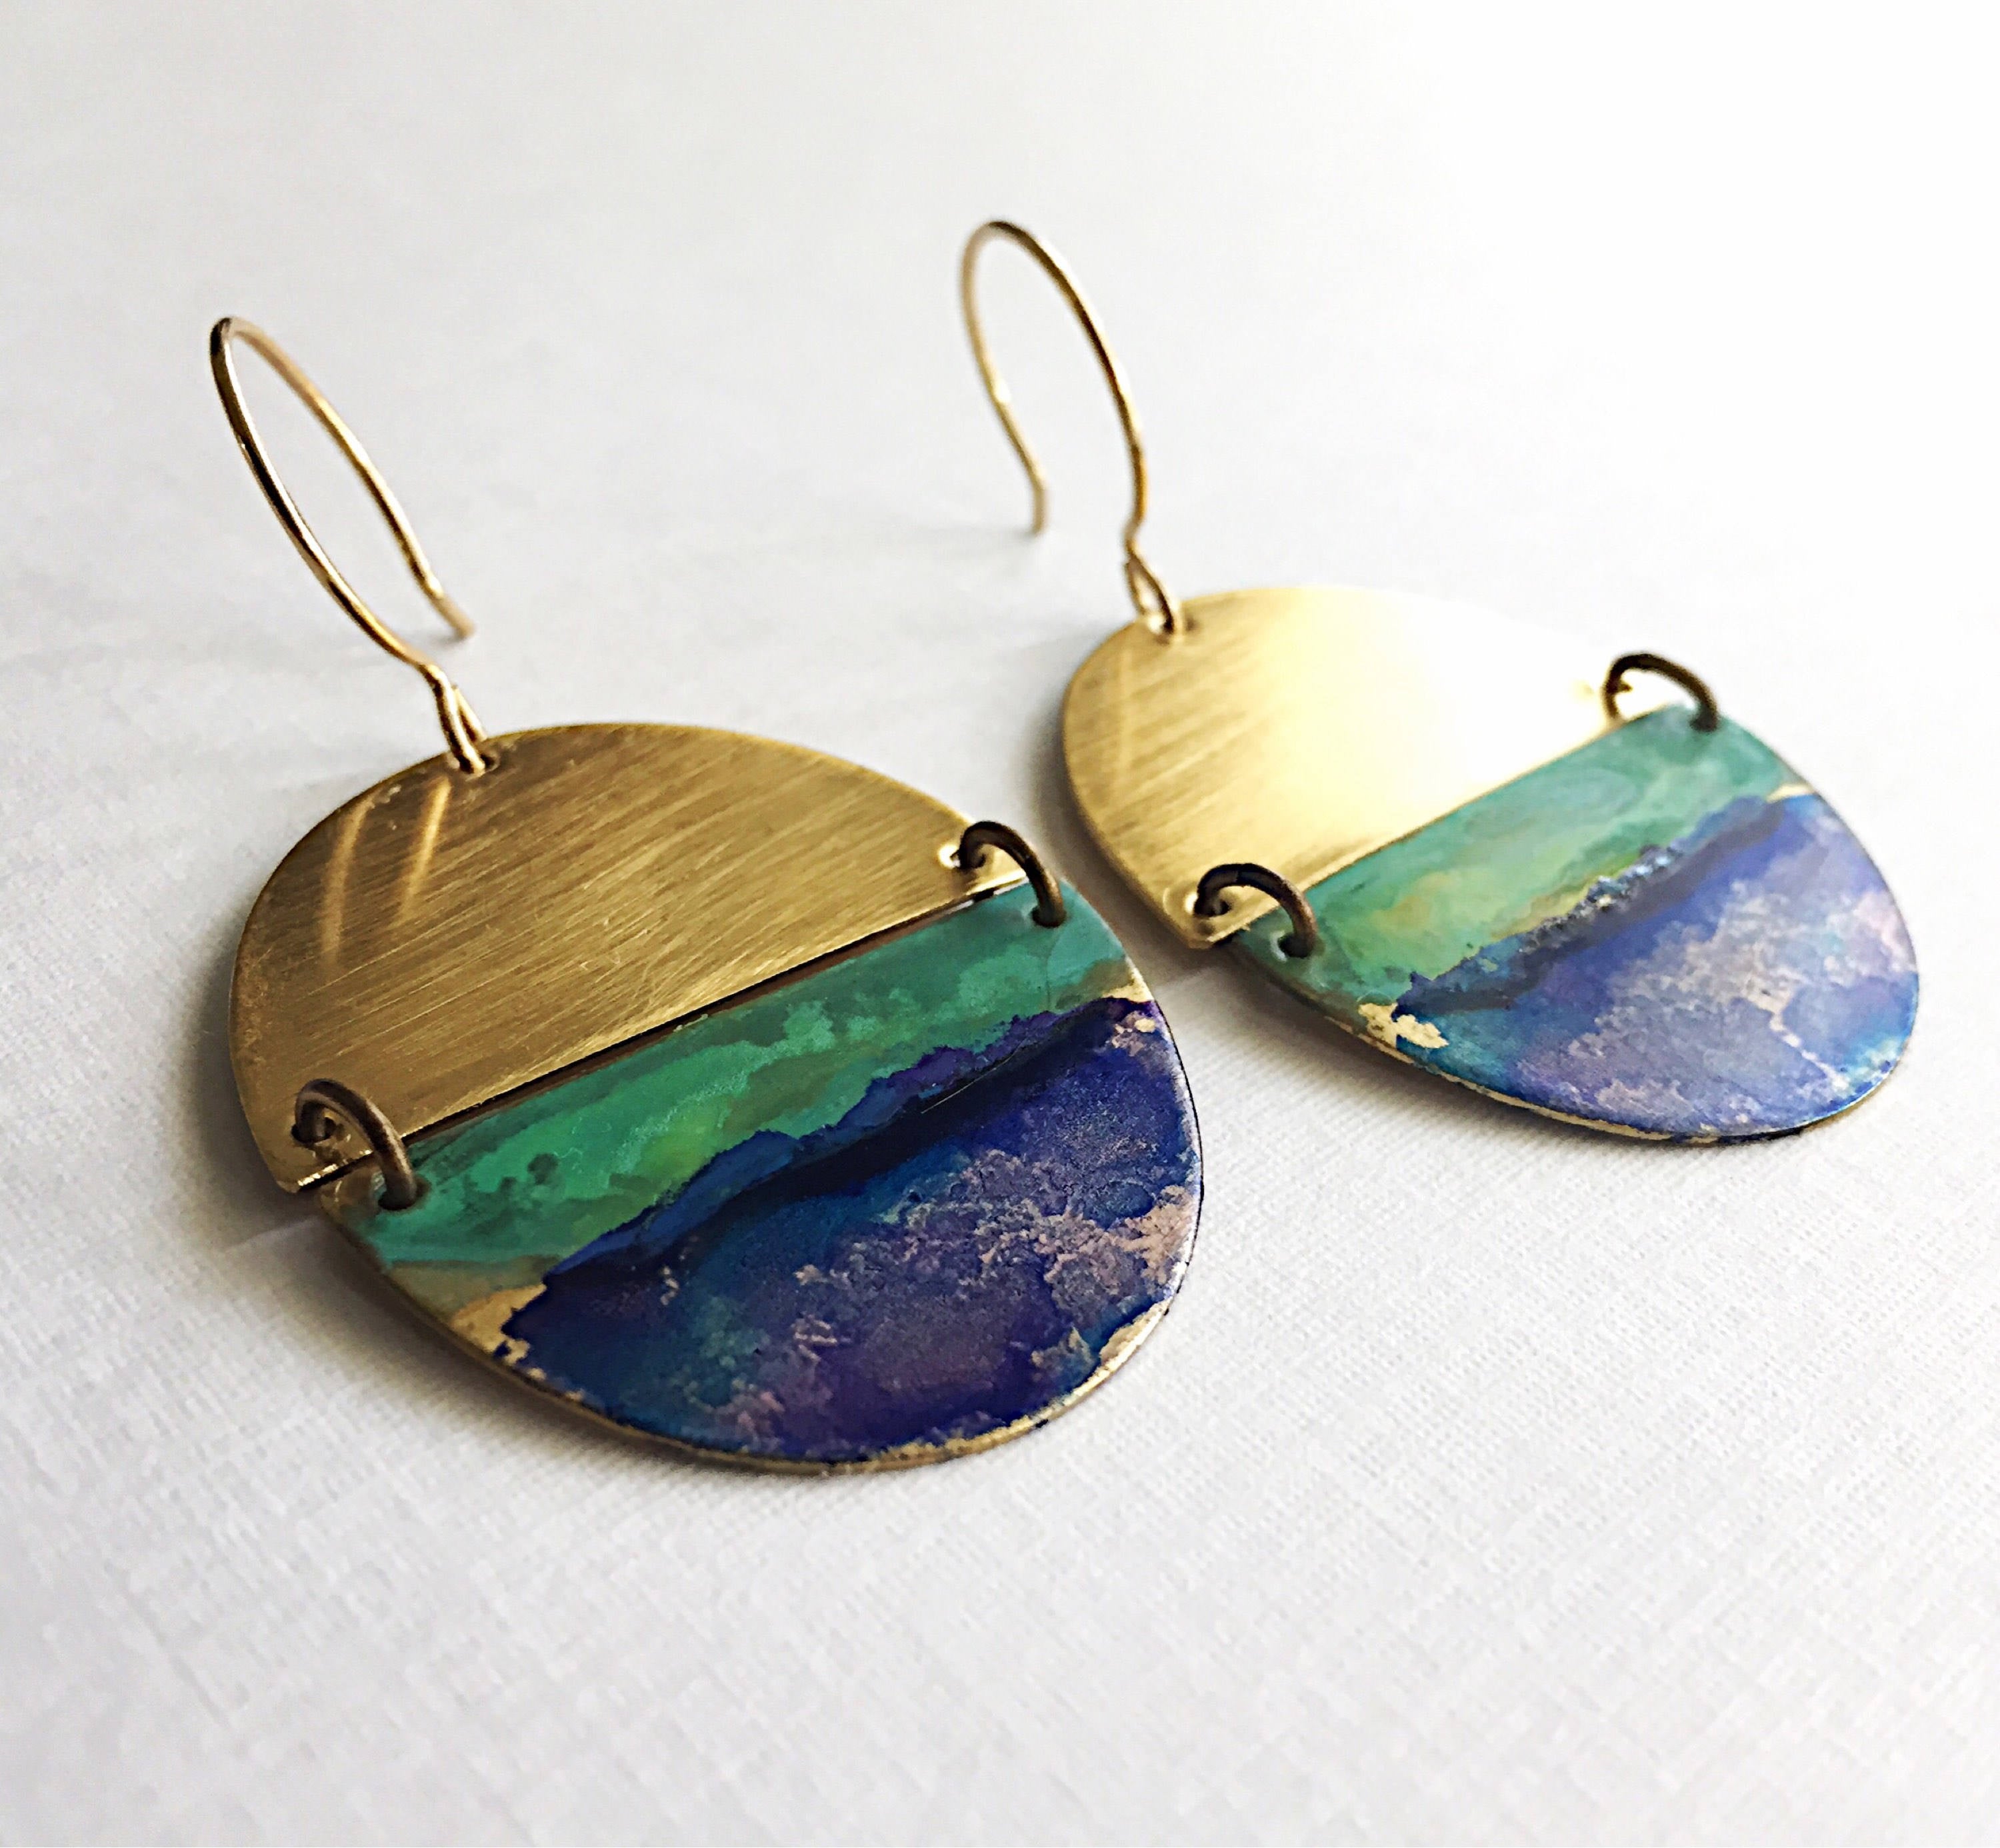 Brass Oval Earrings - Watercolor Patina